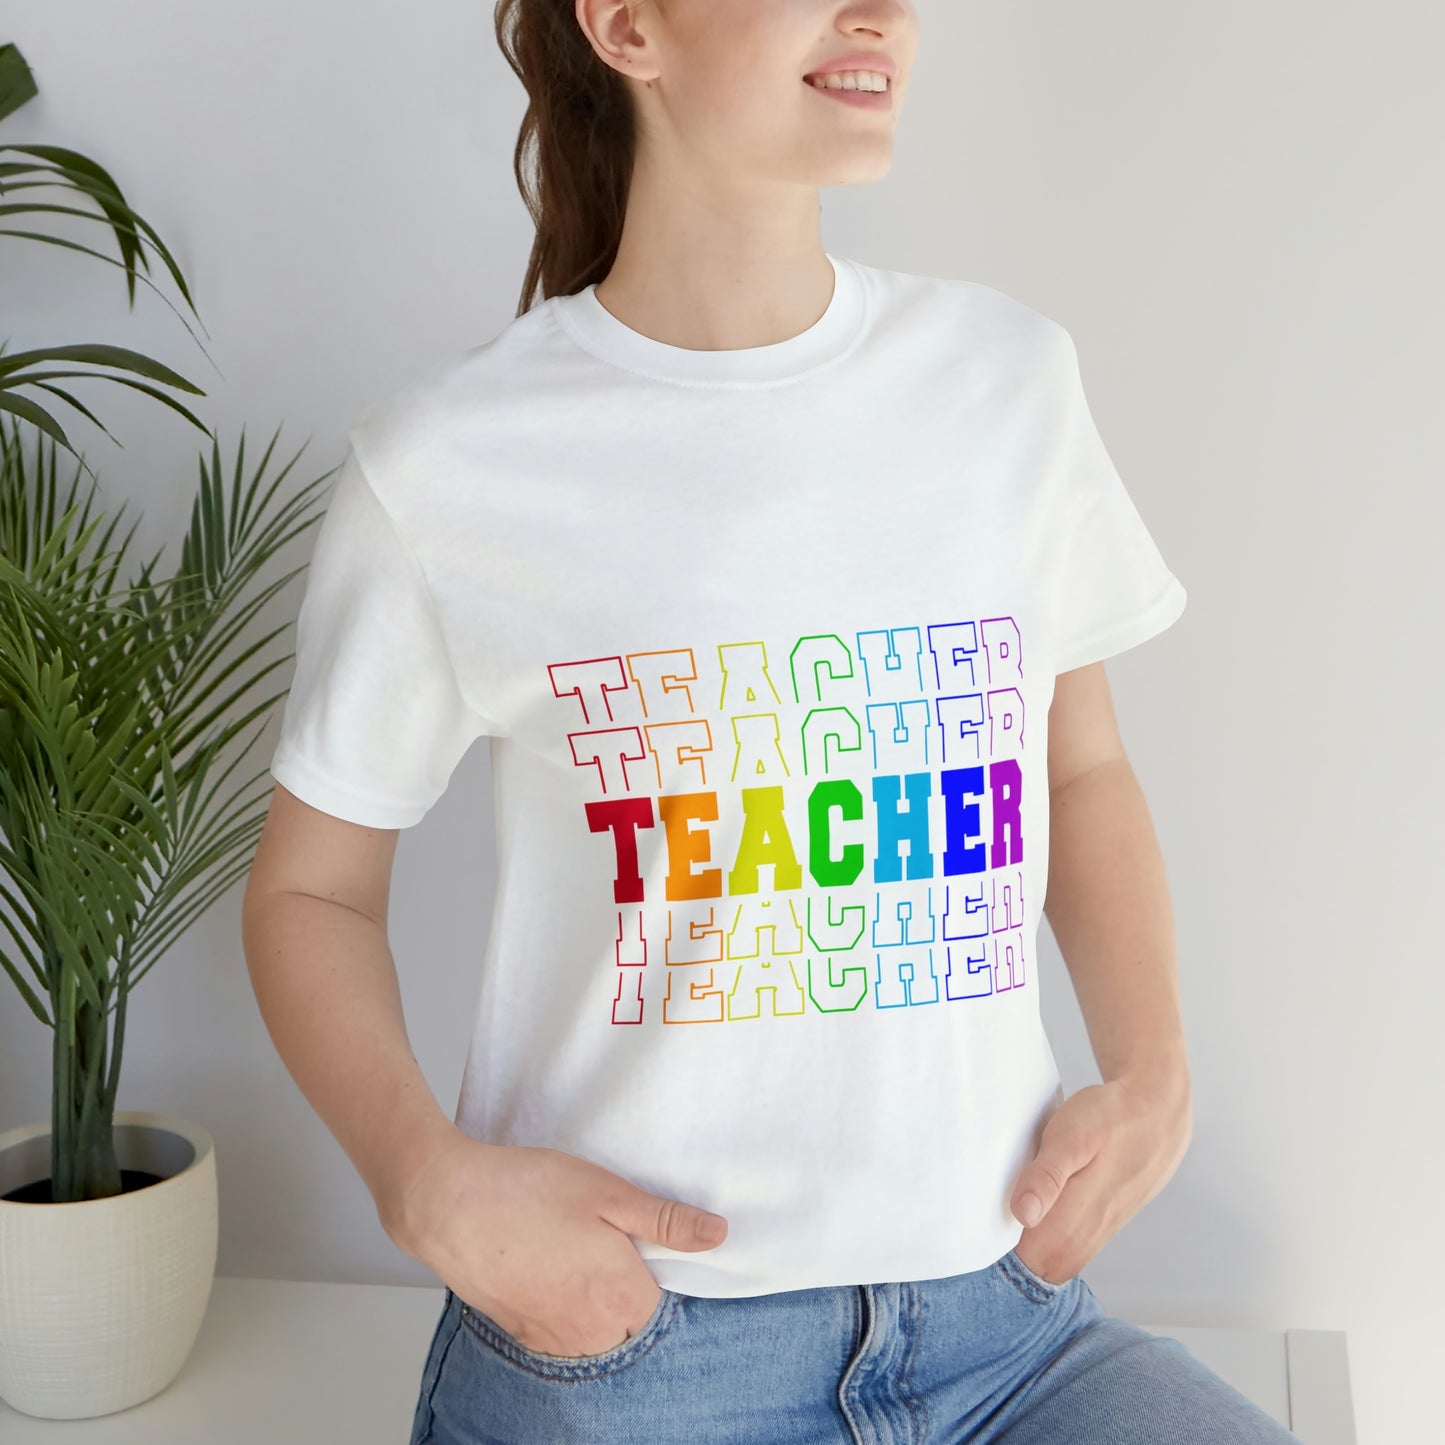 Colorful and fun "Teacher" Unisex Jersey Short Sleeve Tee